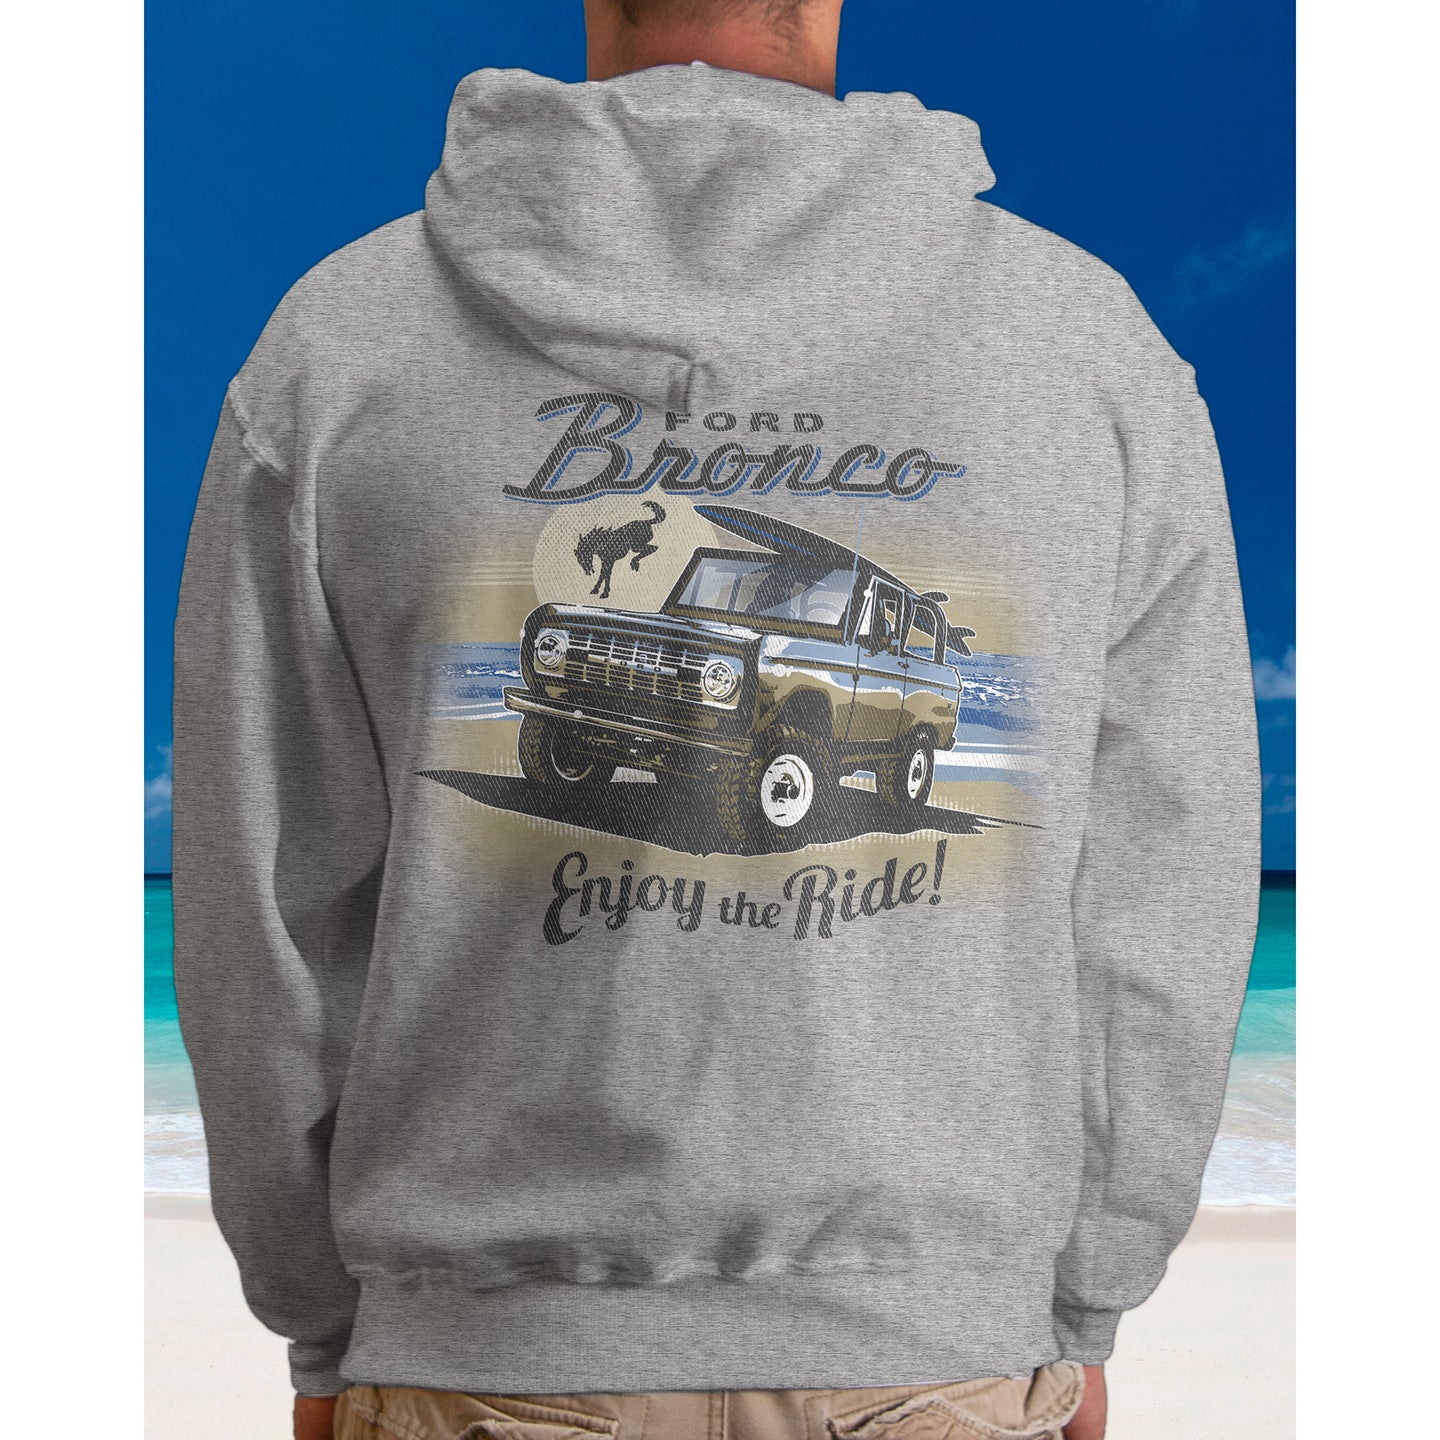 Ford Hoodie, Officially Licensed Bronco Enjoy The Ride Hooded Sweatshirt